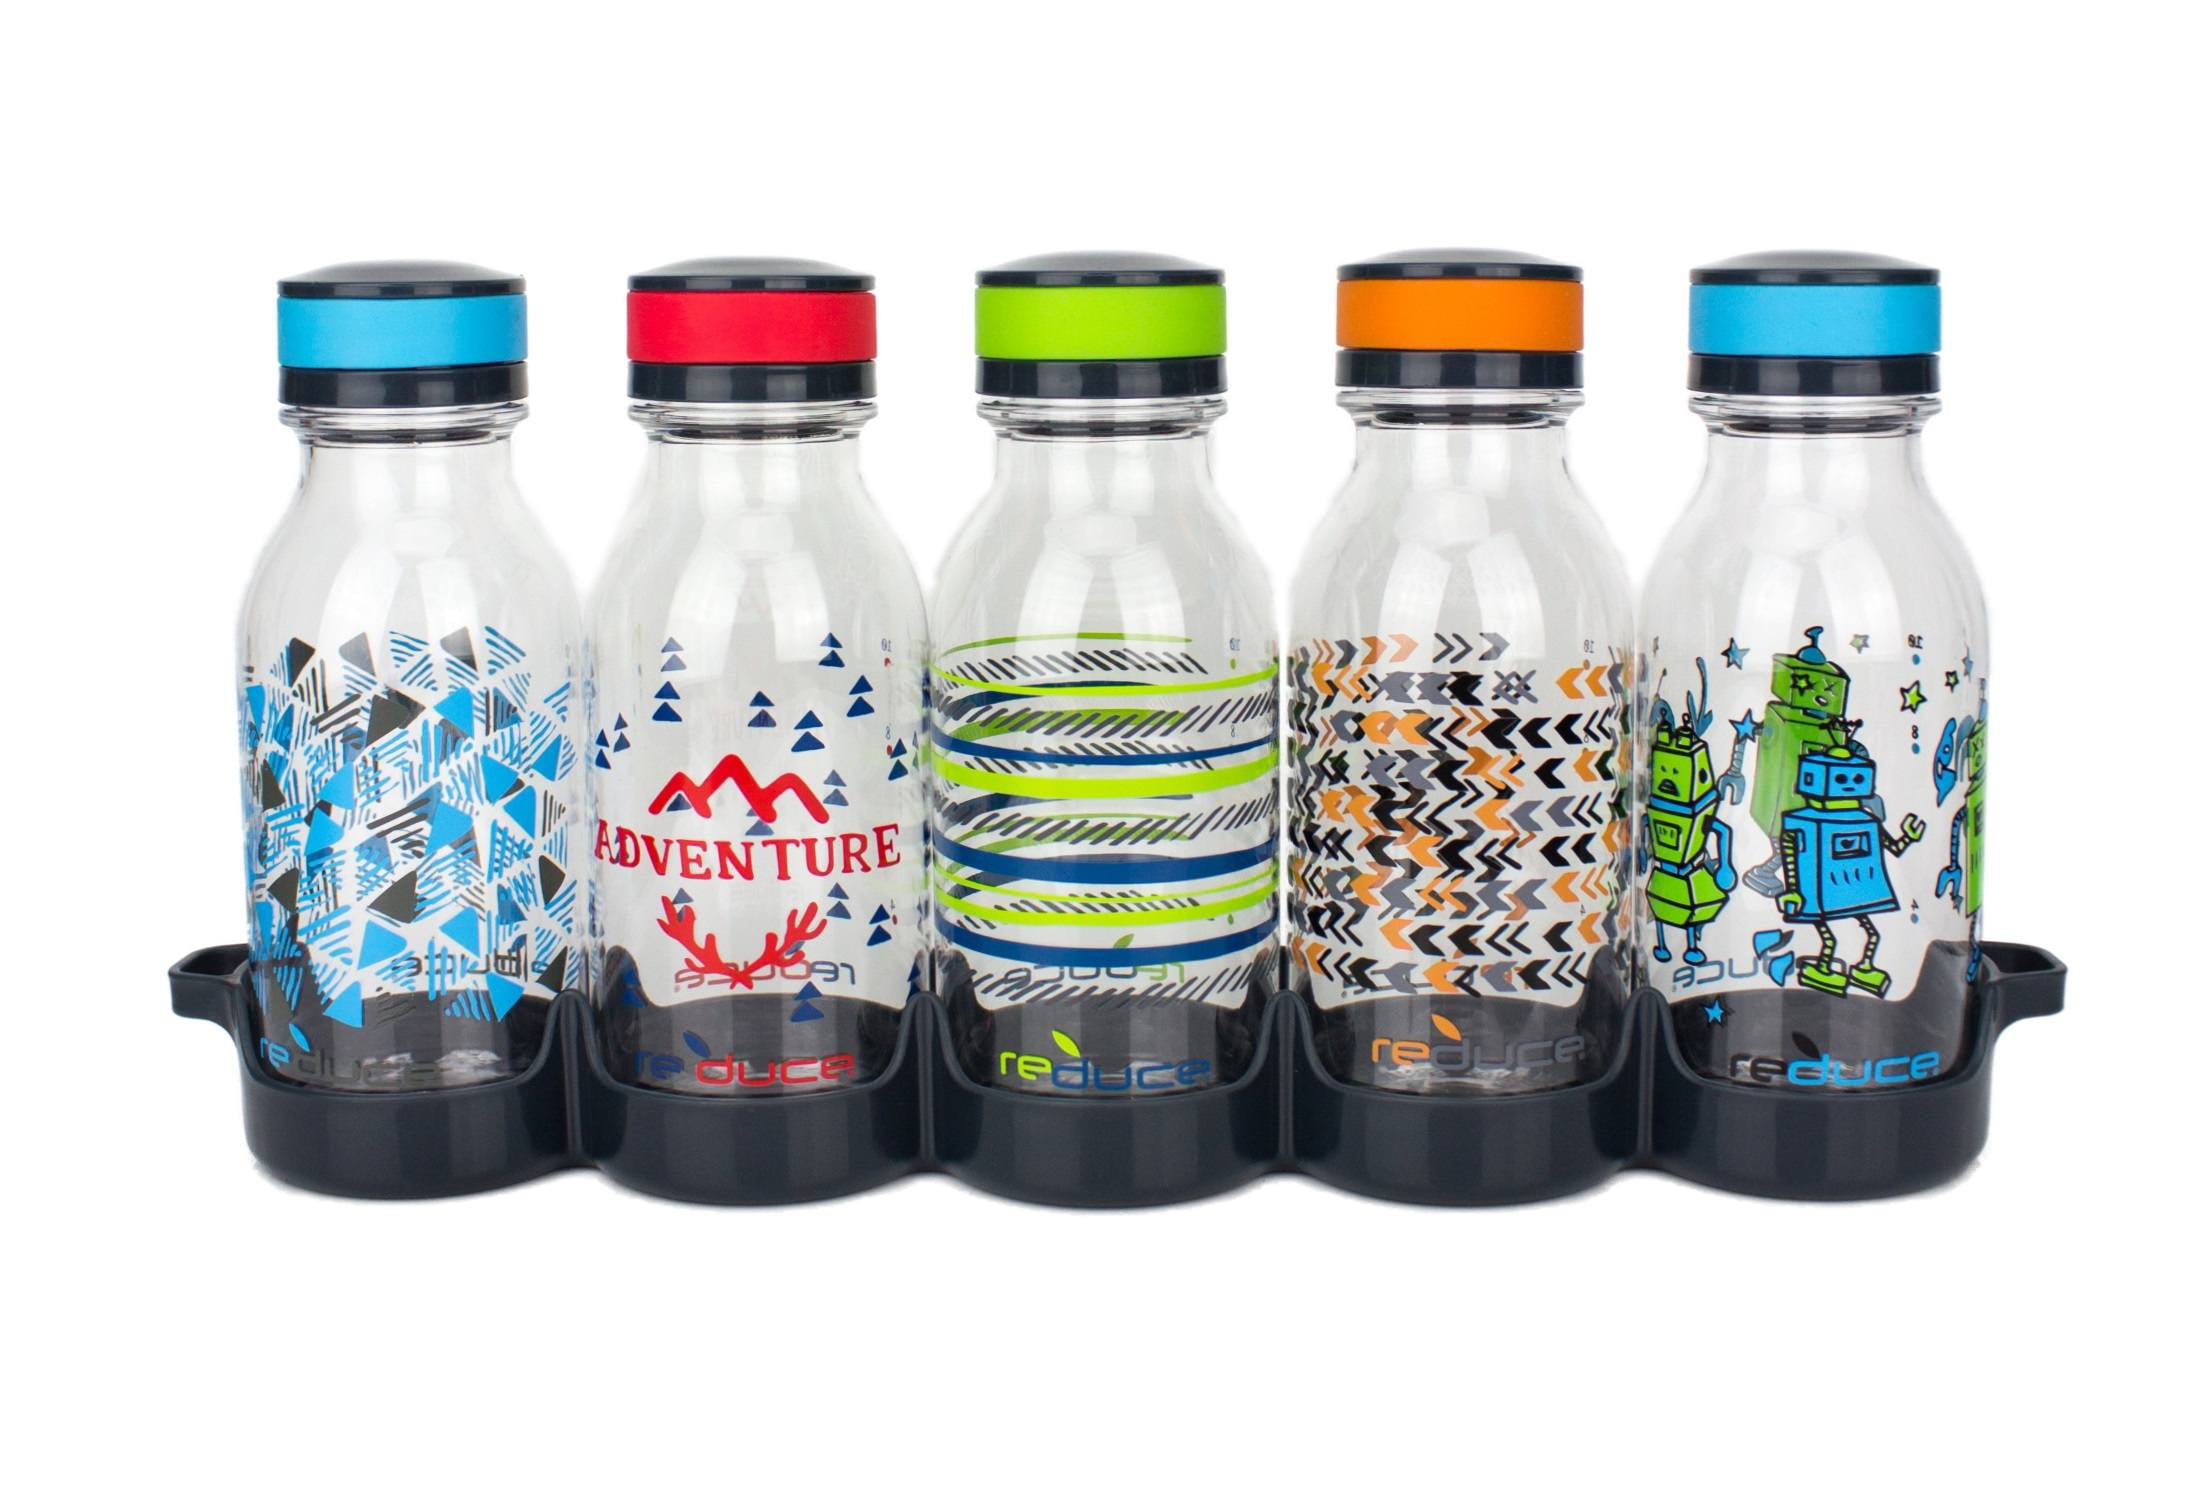 Reduce WaterWeek Reusable Water Bottles, 16oz Classic Style – Includes 5  Refillable Water Bottles Plus Bonus Fridge Tray For Your Water Bottle Set –